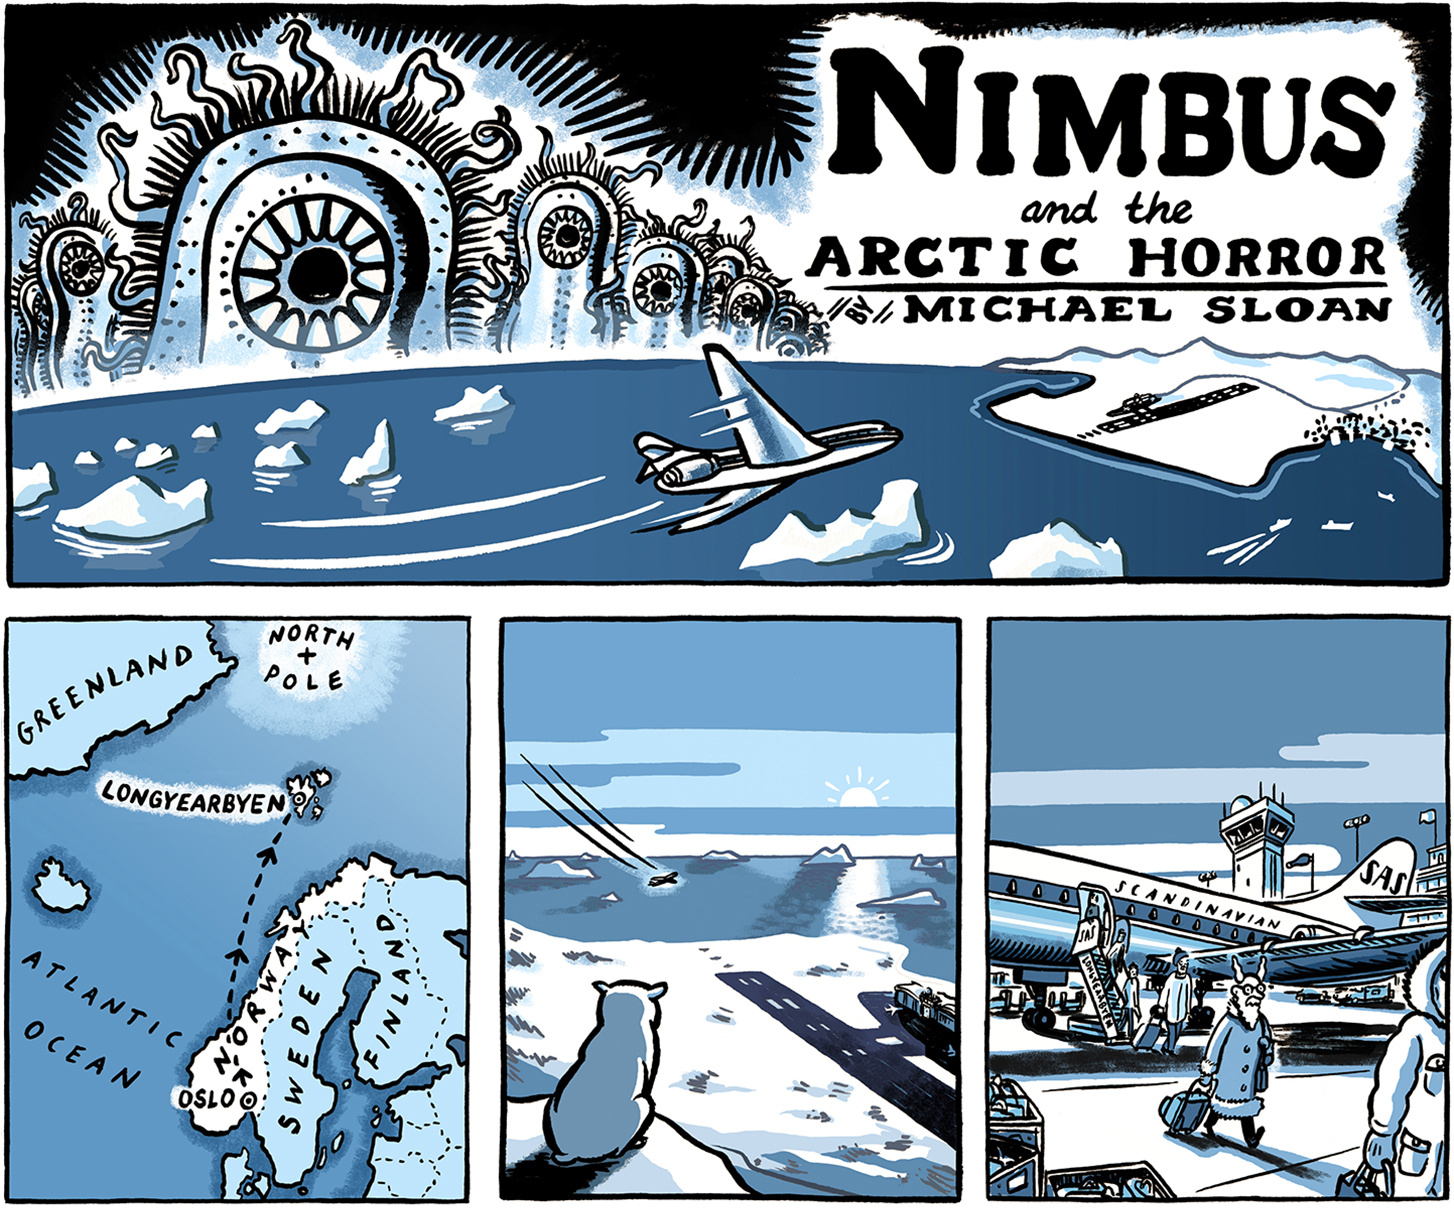  Nimbus and the Arctic Horror, panels 1-4.  